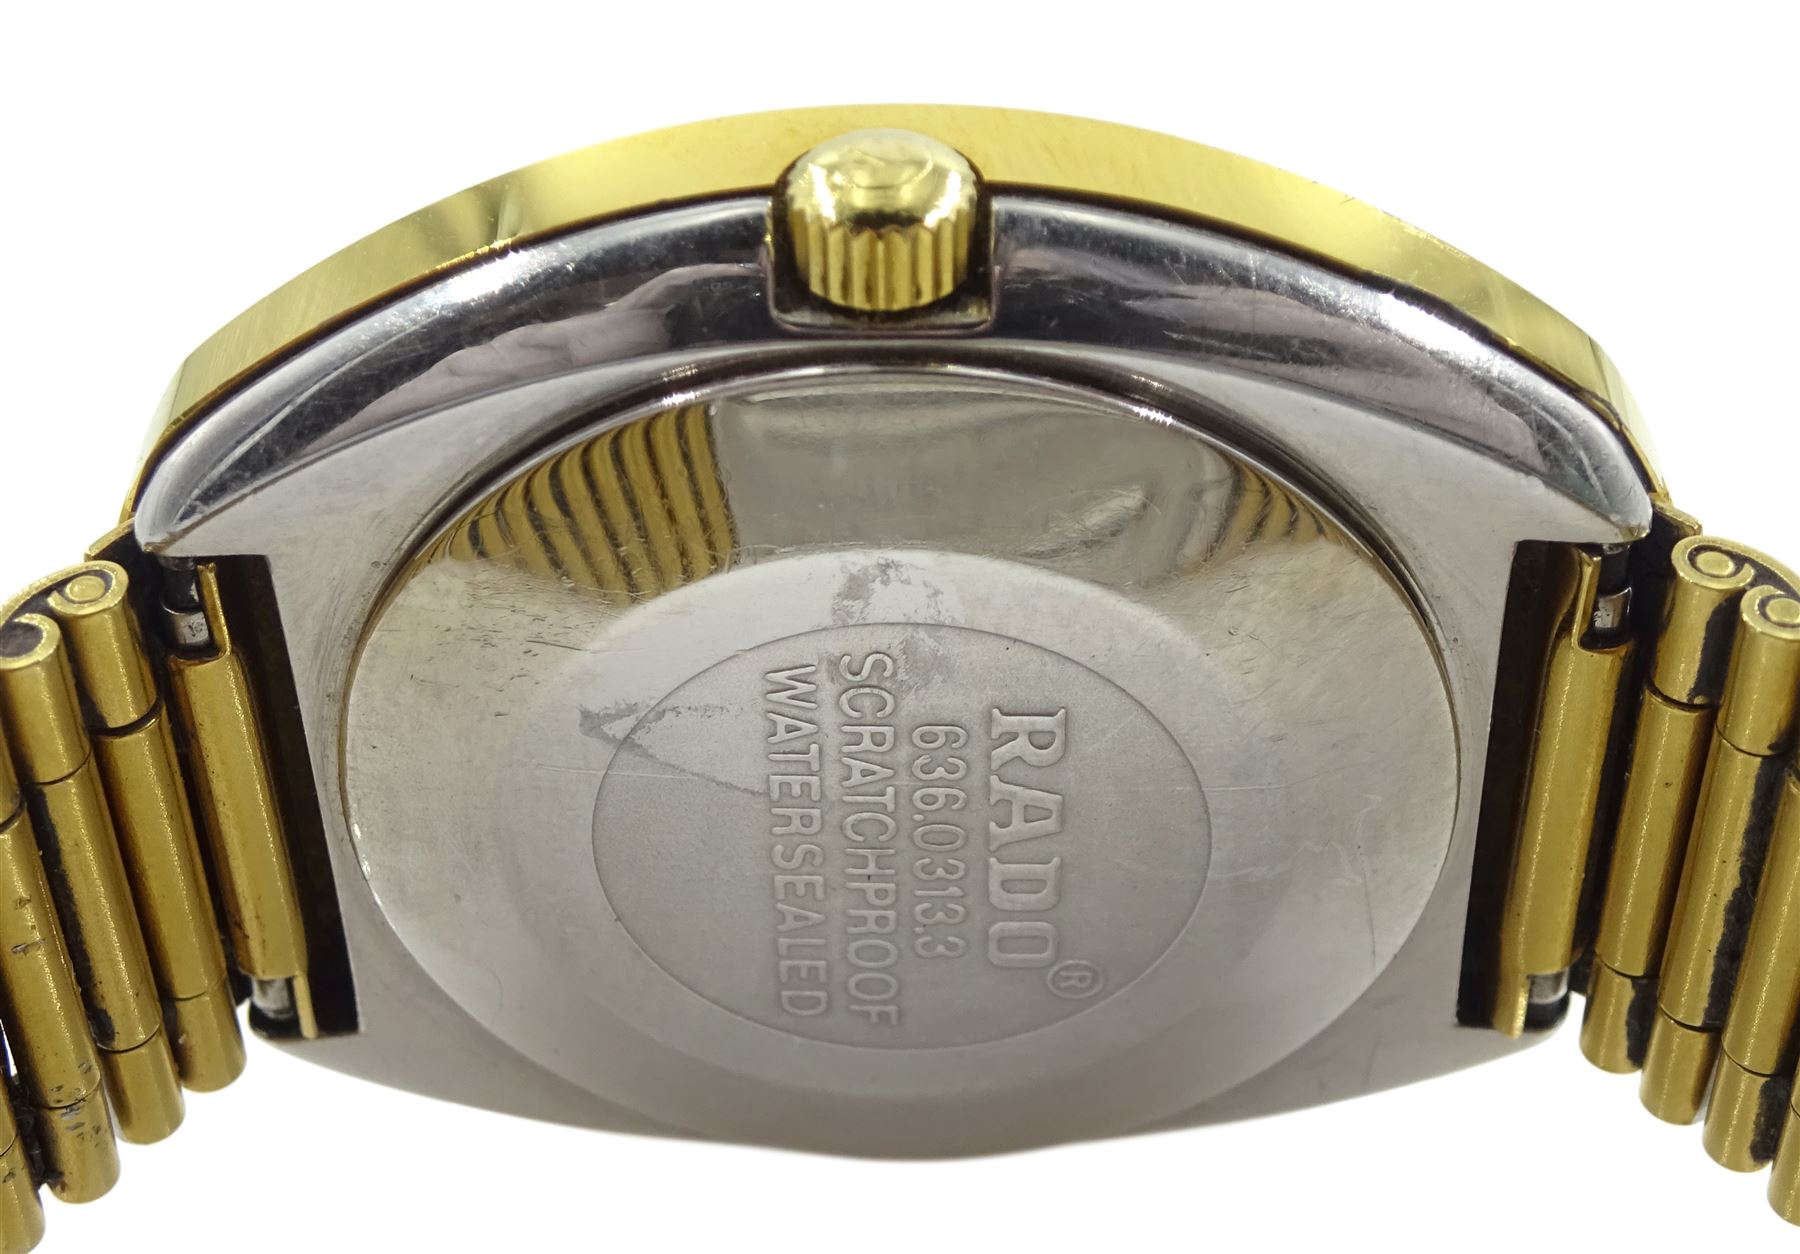 Rado DiaStar automatic gilt stainless steel wristwatch - Image 3 of 4